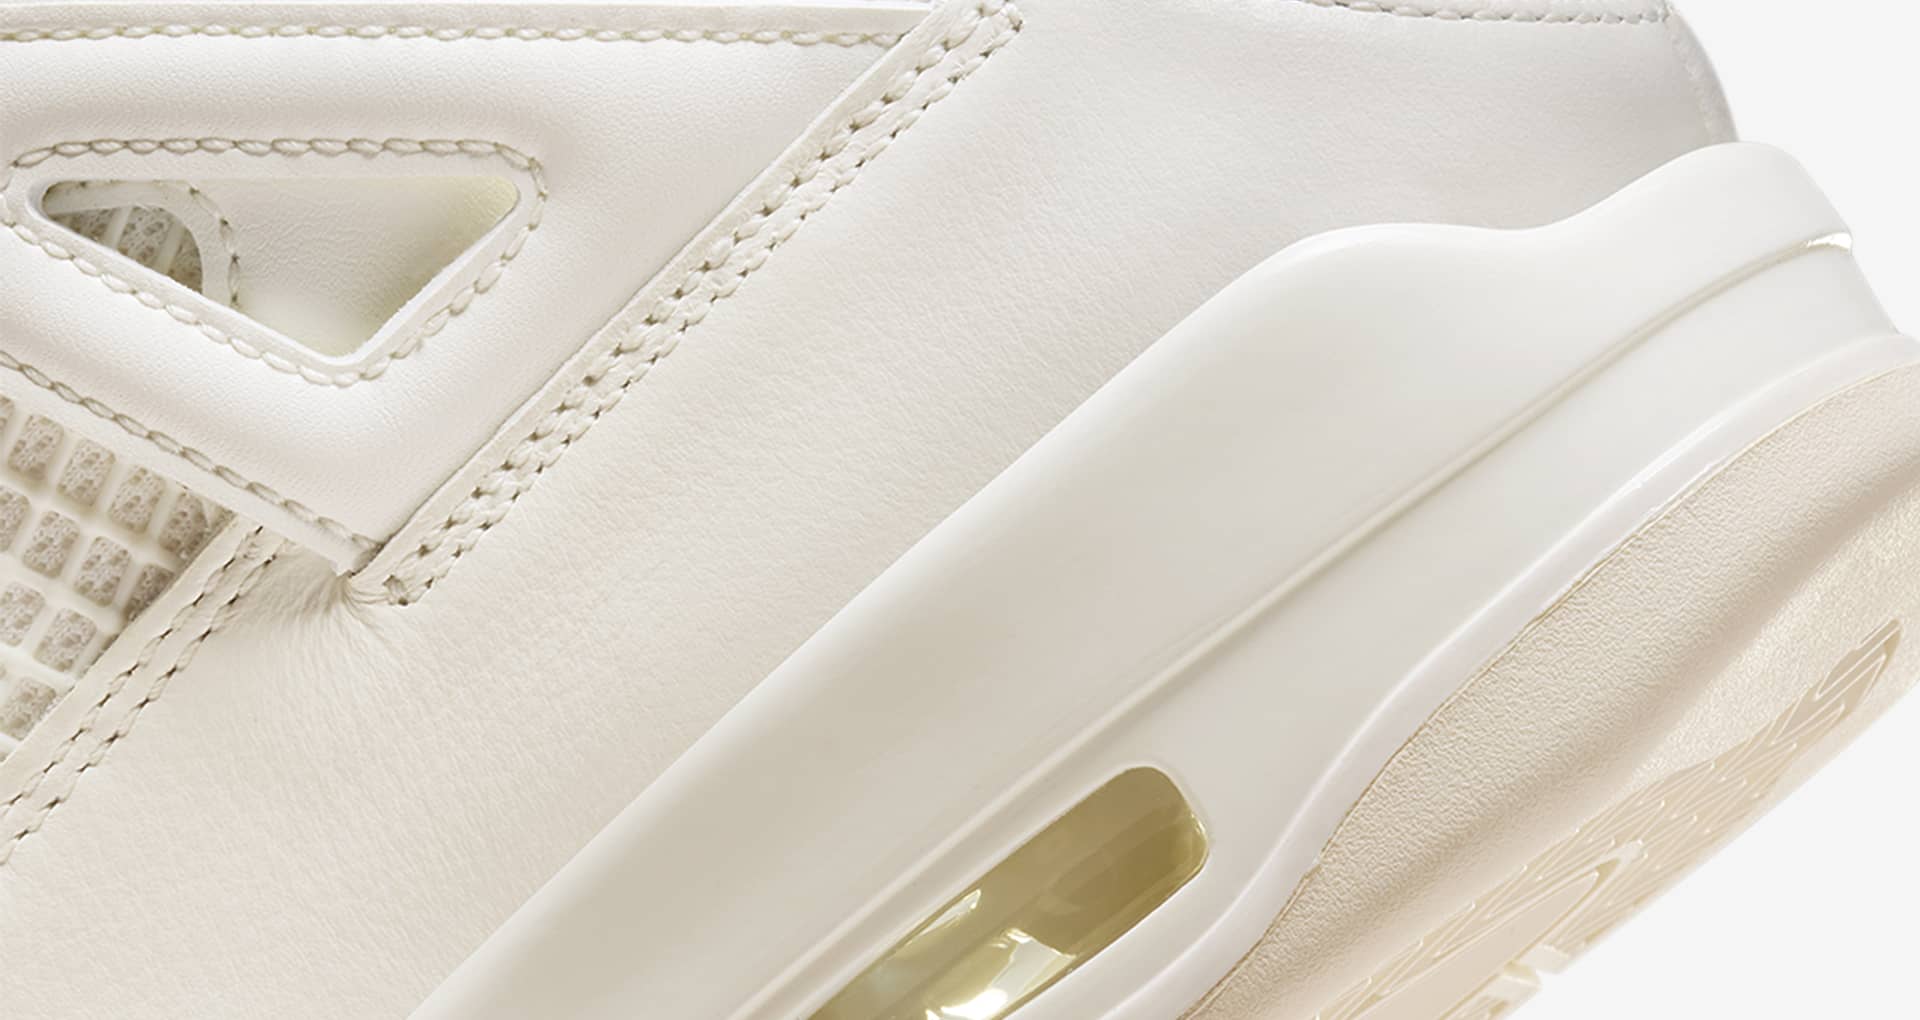 Women's Air Jordan 4 'White & Gold' (AQ9129-170) Release Date. Nike SNKRS